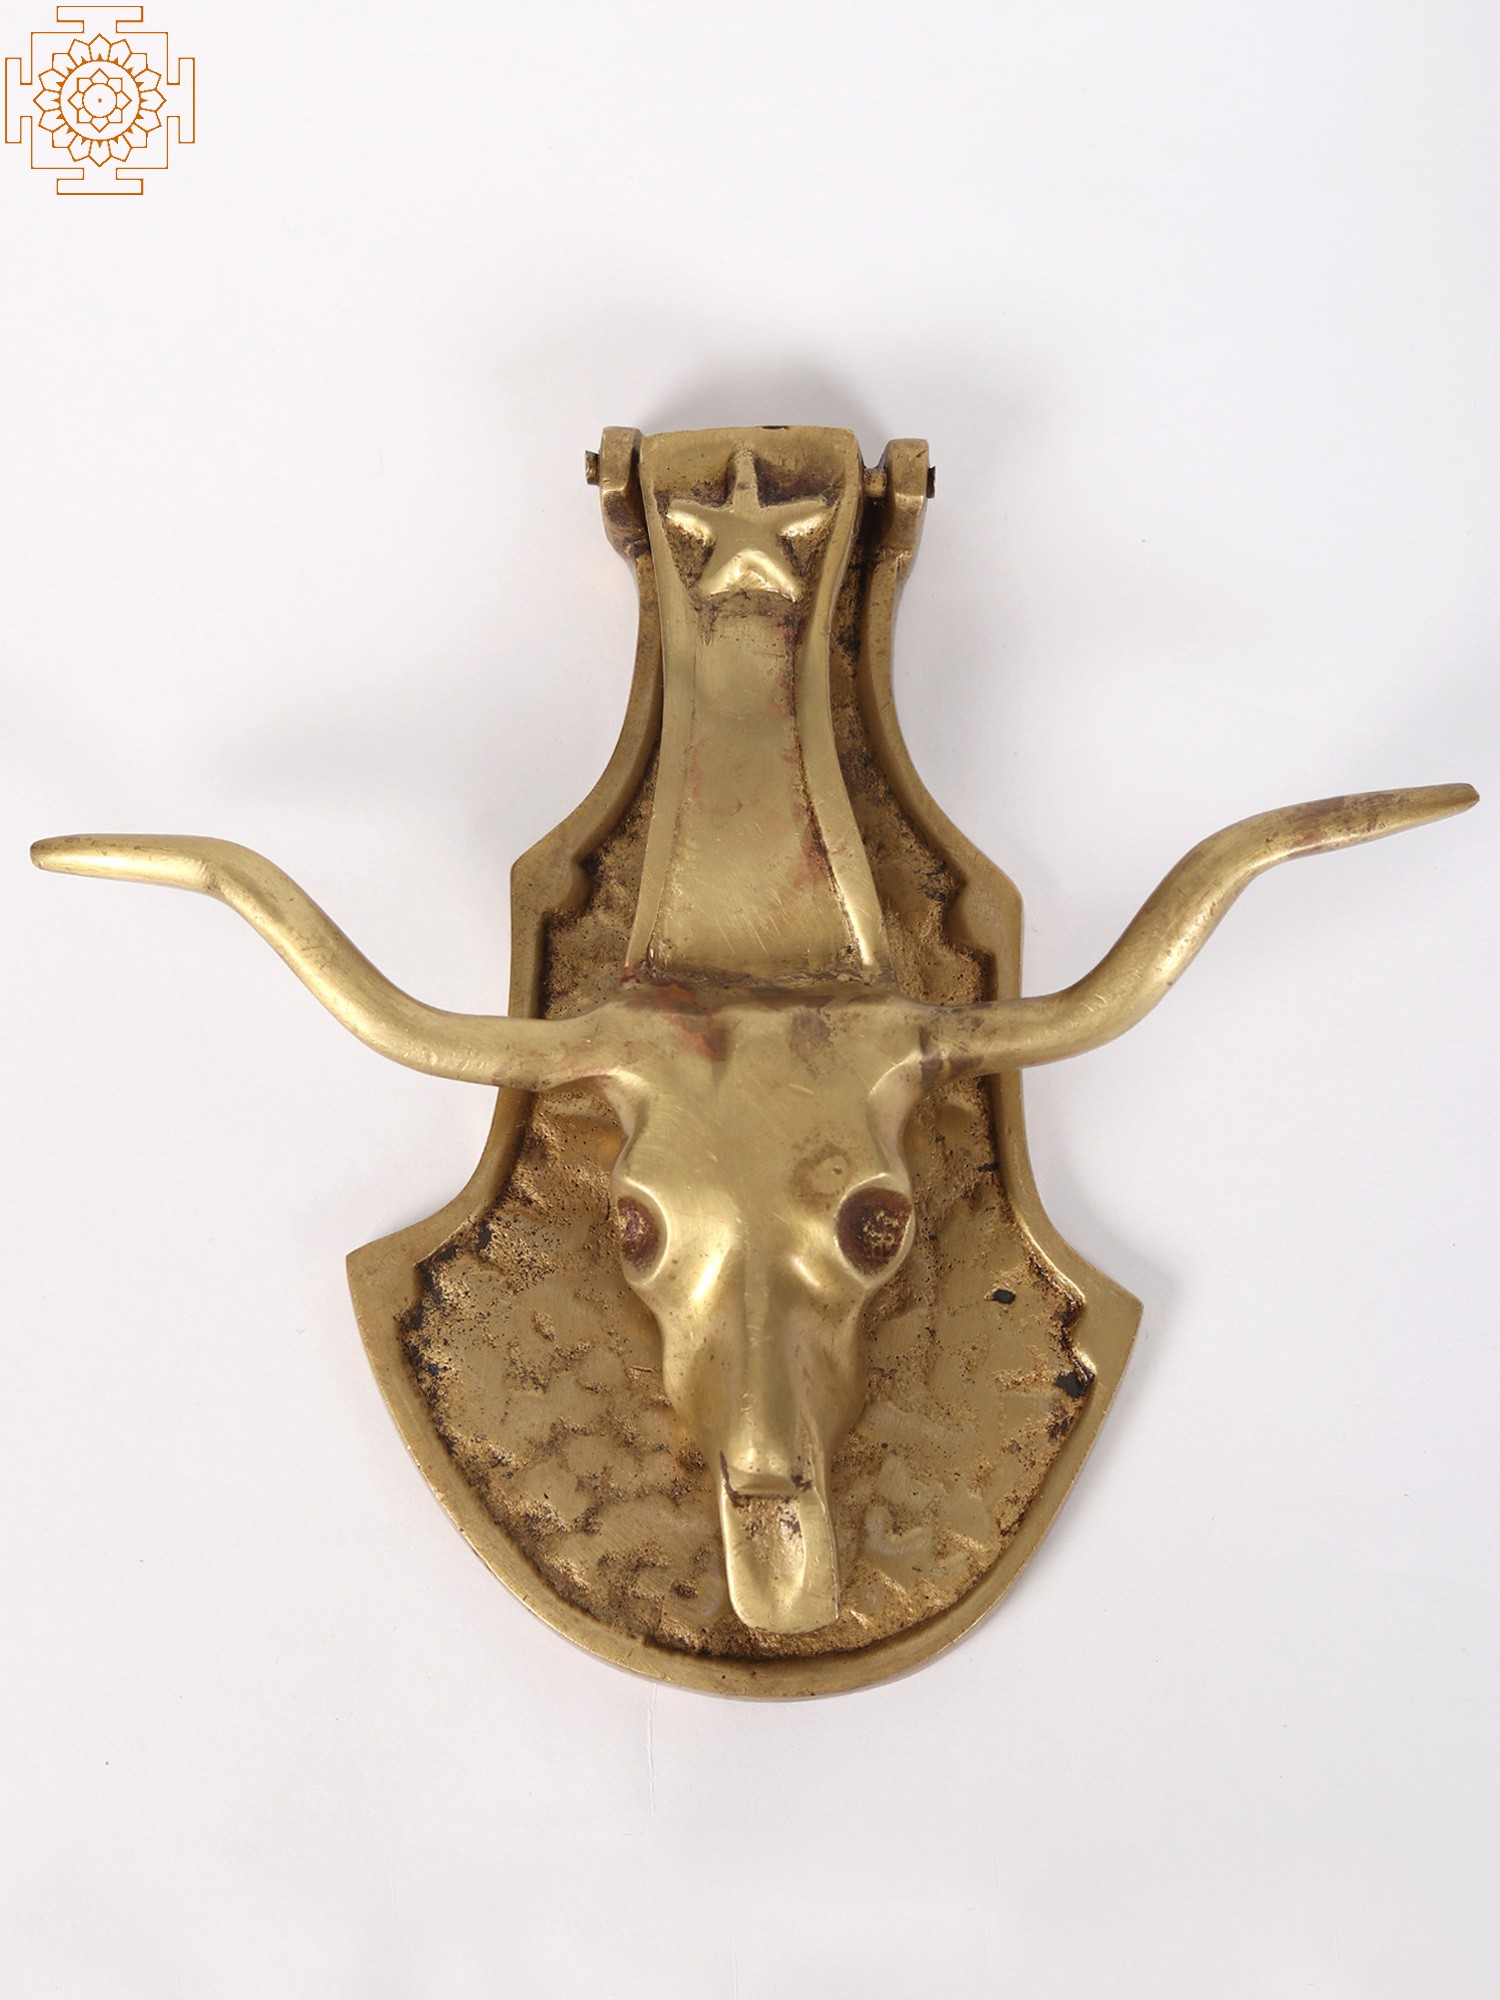 7" Brass Bull Head Door Knocker - Brass - image 1 of 4